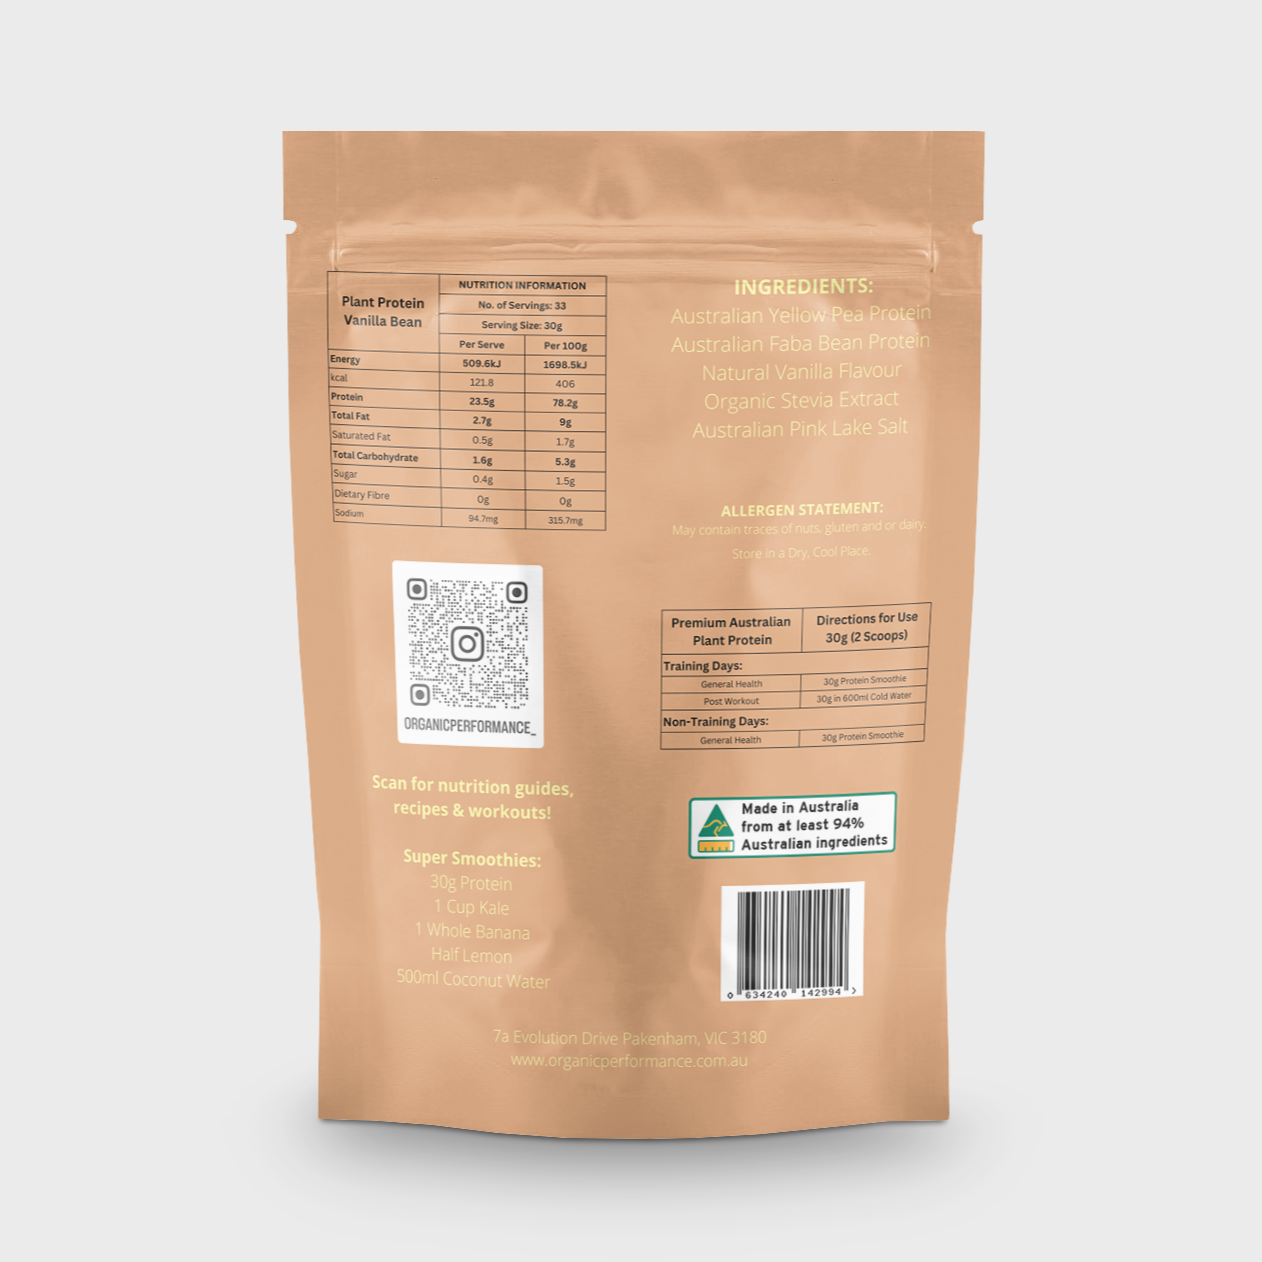 Premium Australian Plant Protein - Vanilla Bean 1kg